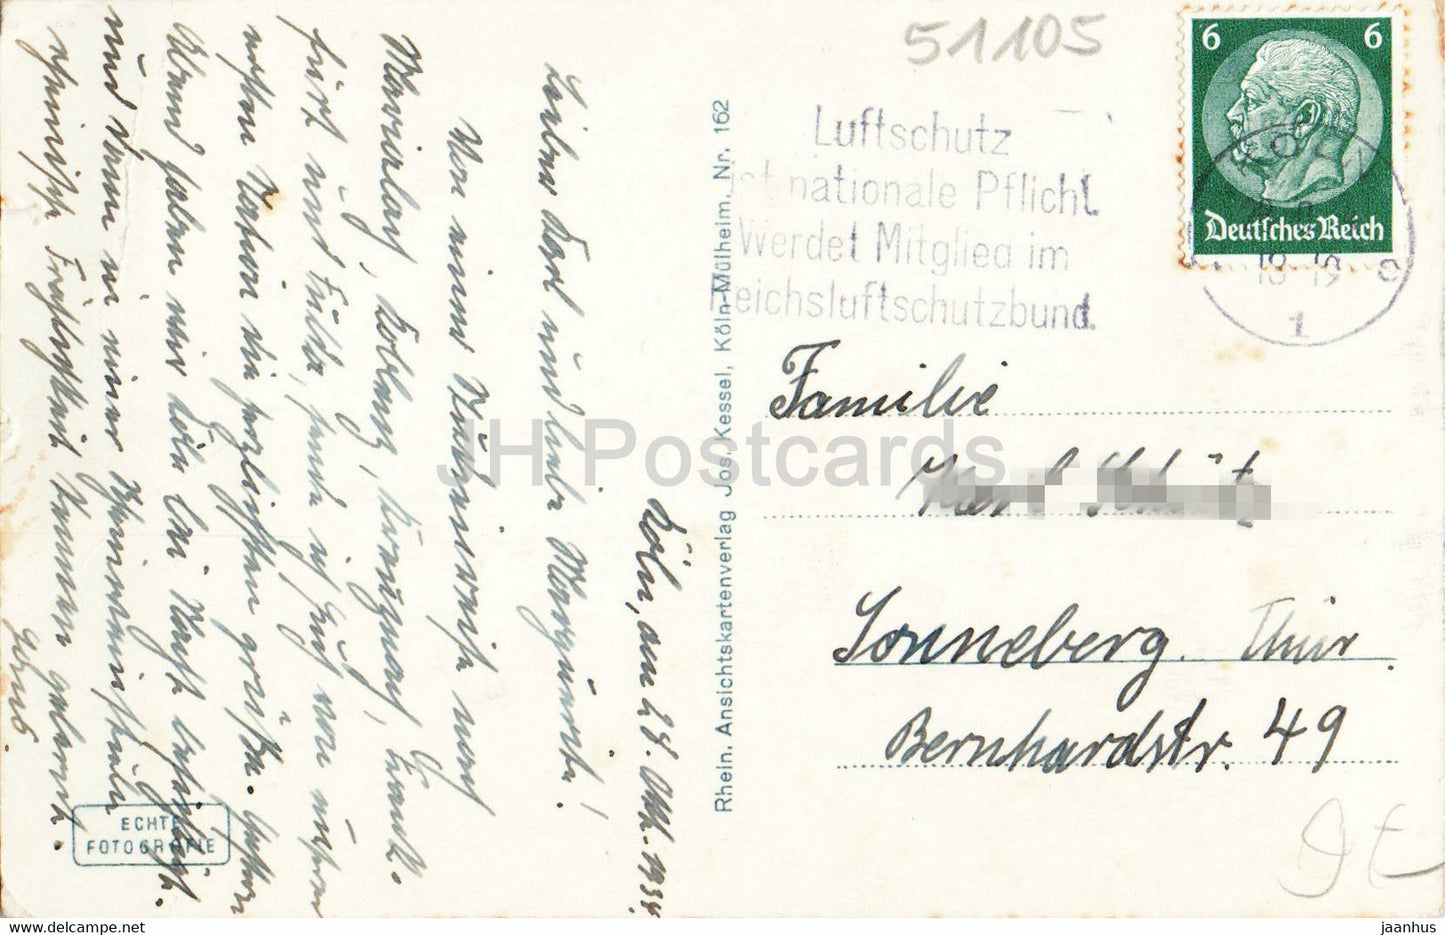 Koln - Cologne - Hindenburgbrucke mit Blick auf Koln - bridge - tram - 1934 - old postcard - Germany - used